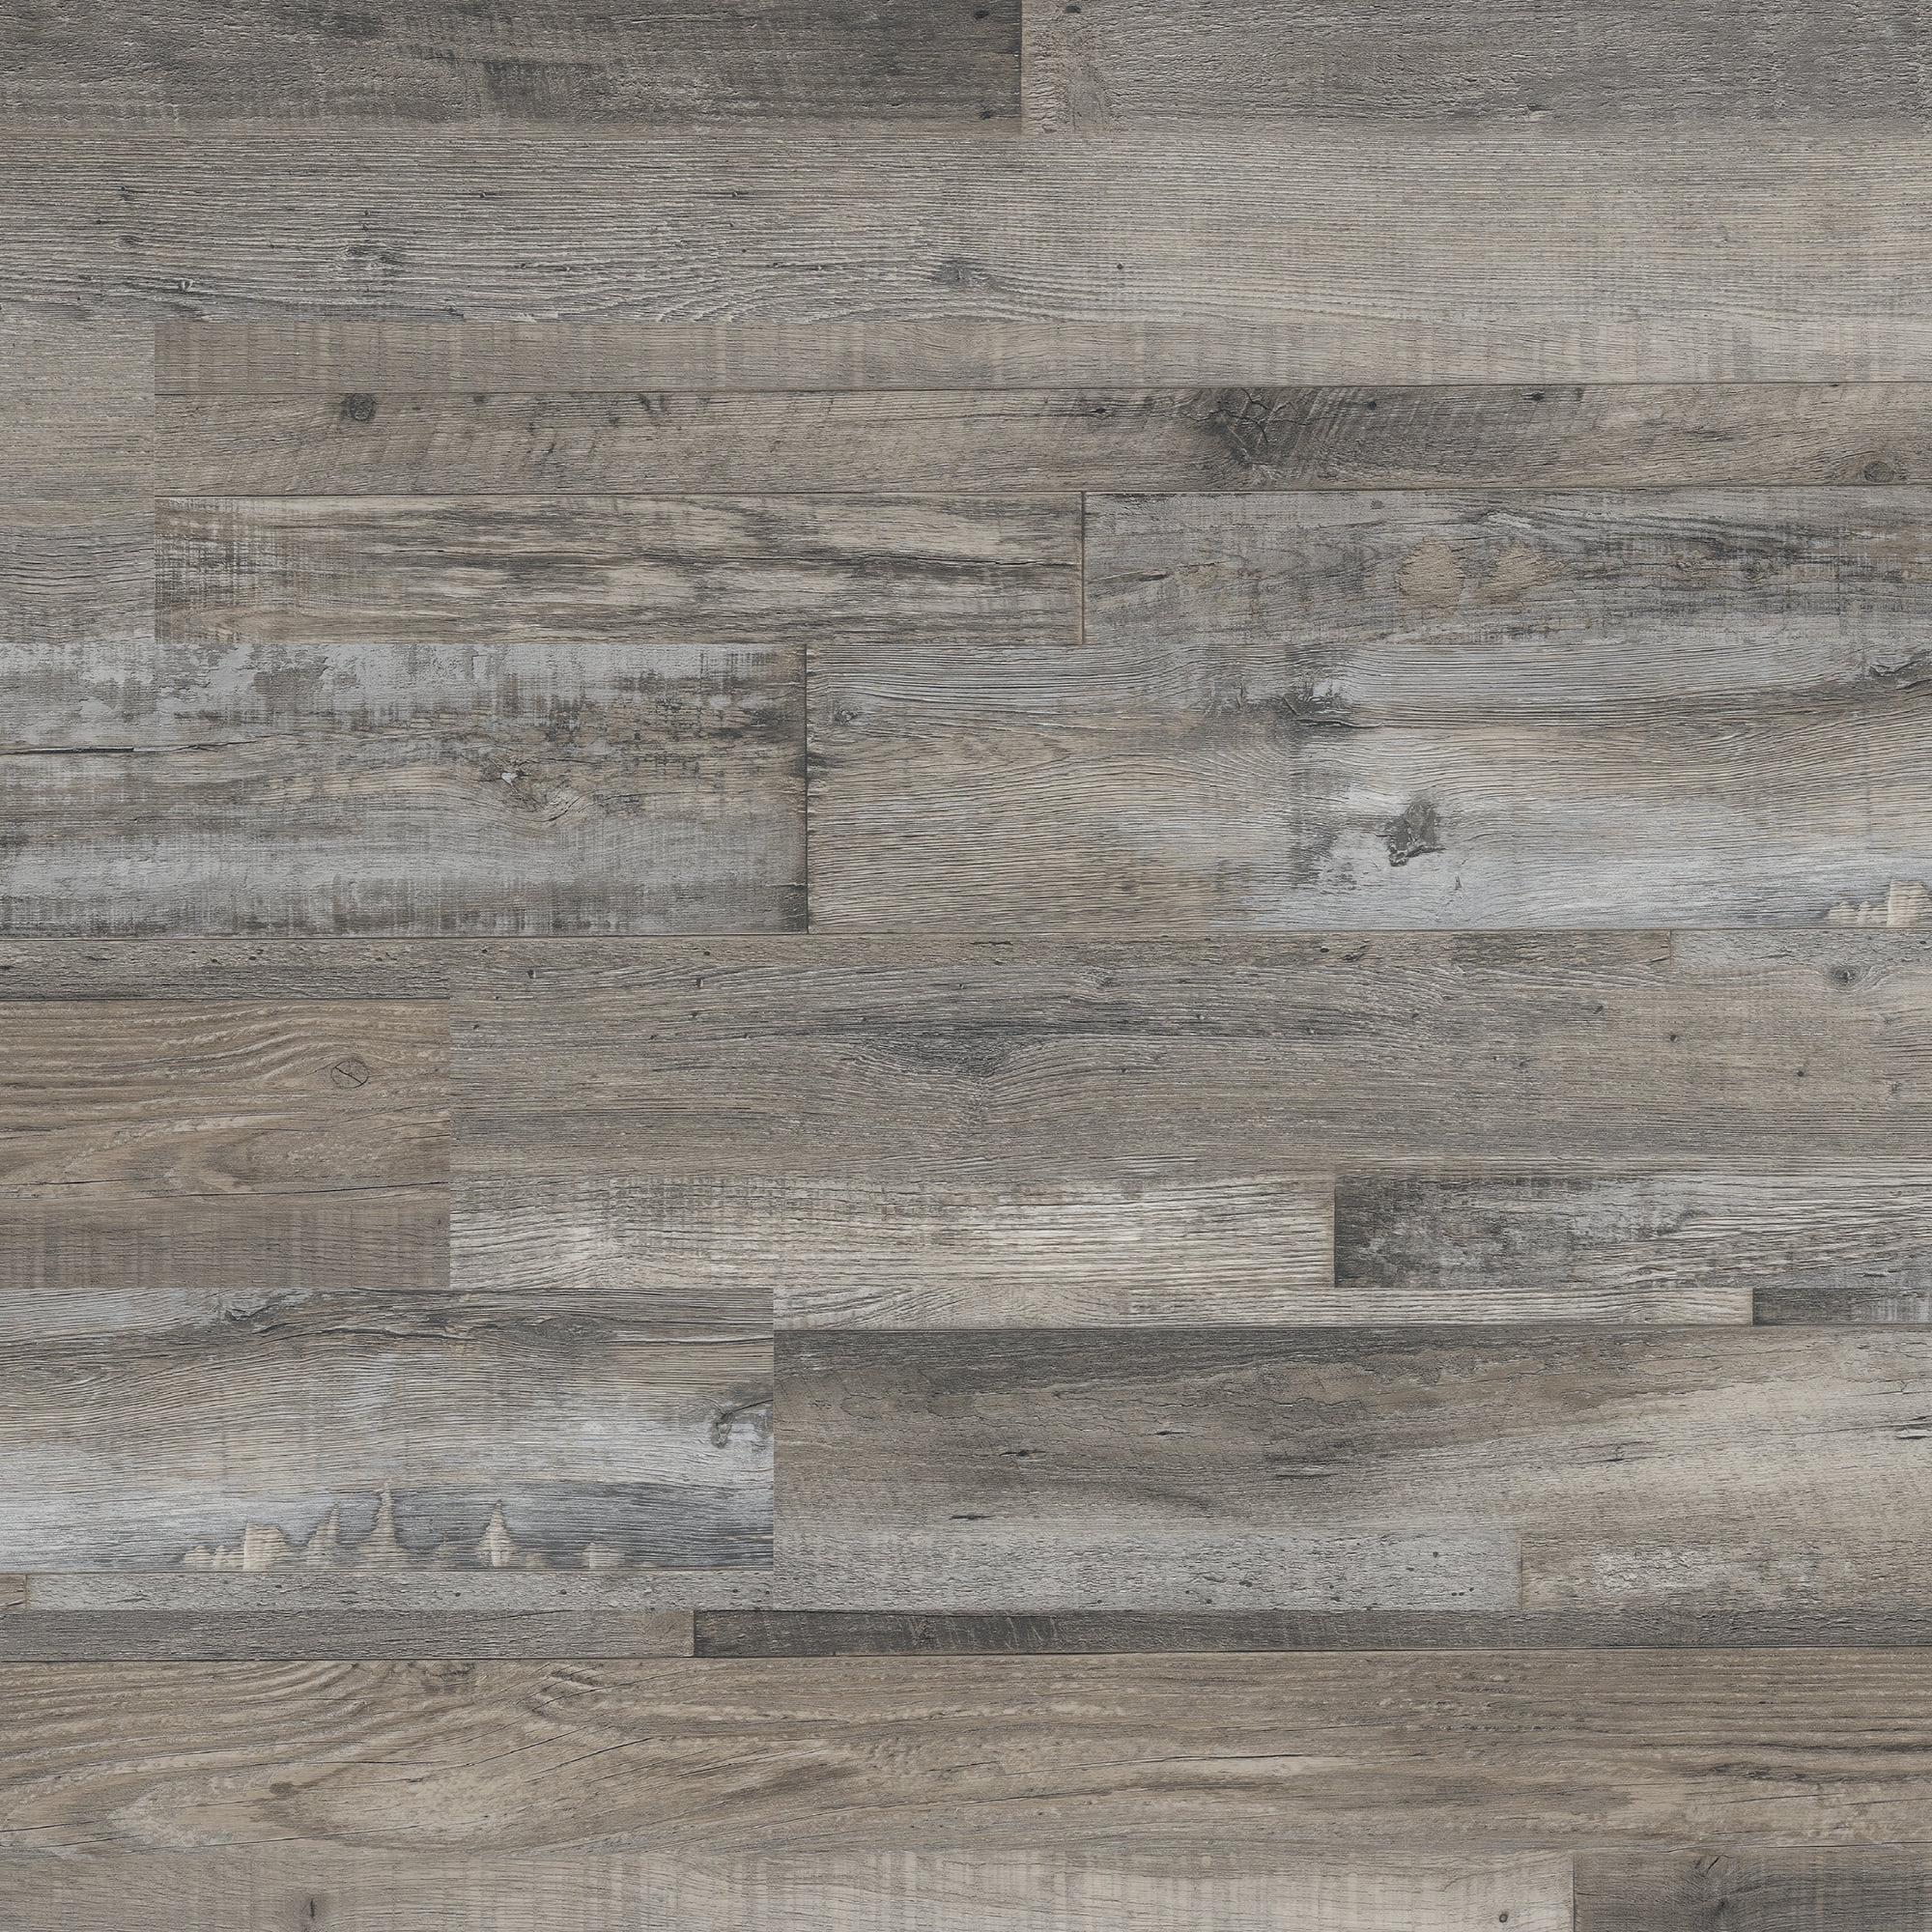 Soulscrafts Luxury Vinyl Plank Flooring LVT Flooring Tile Click Floating  Floor Waterproof Foam Back SPC Rigid Core Wood Grain Finish 48 x 7 Inch  Grey Maple (10-Pack, 23.6 sq.ft) : : Home Improvement